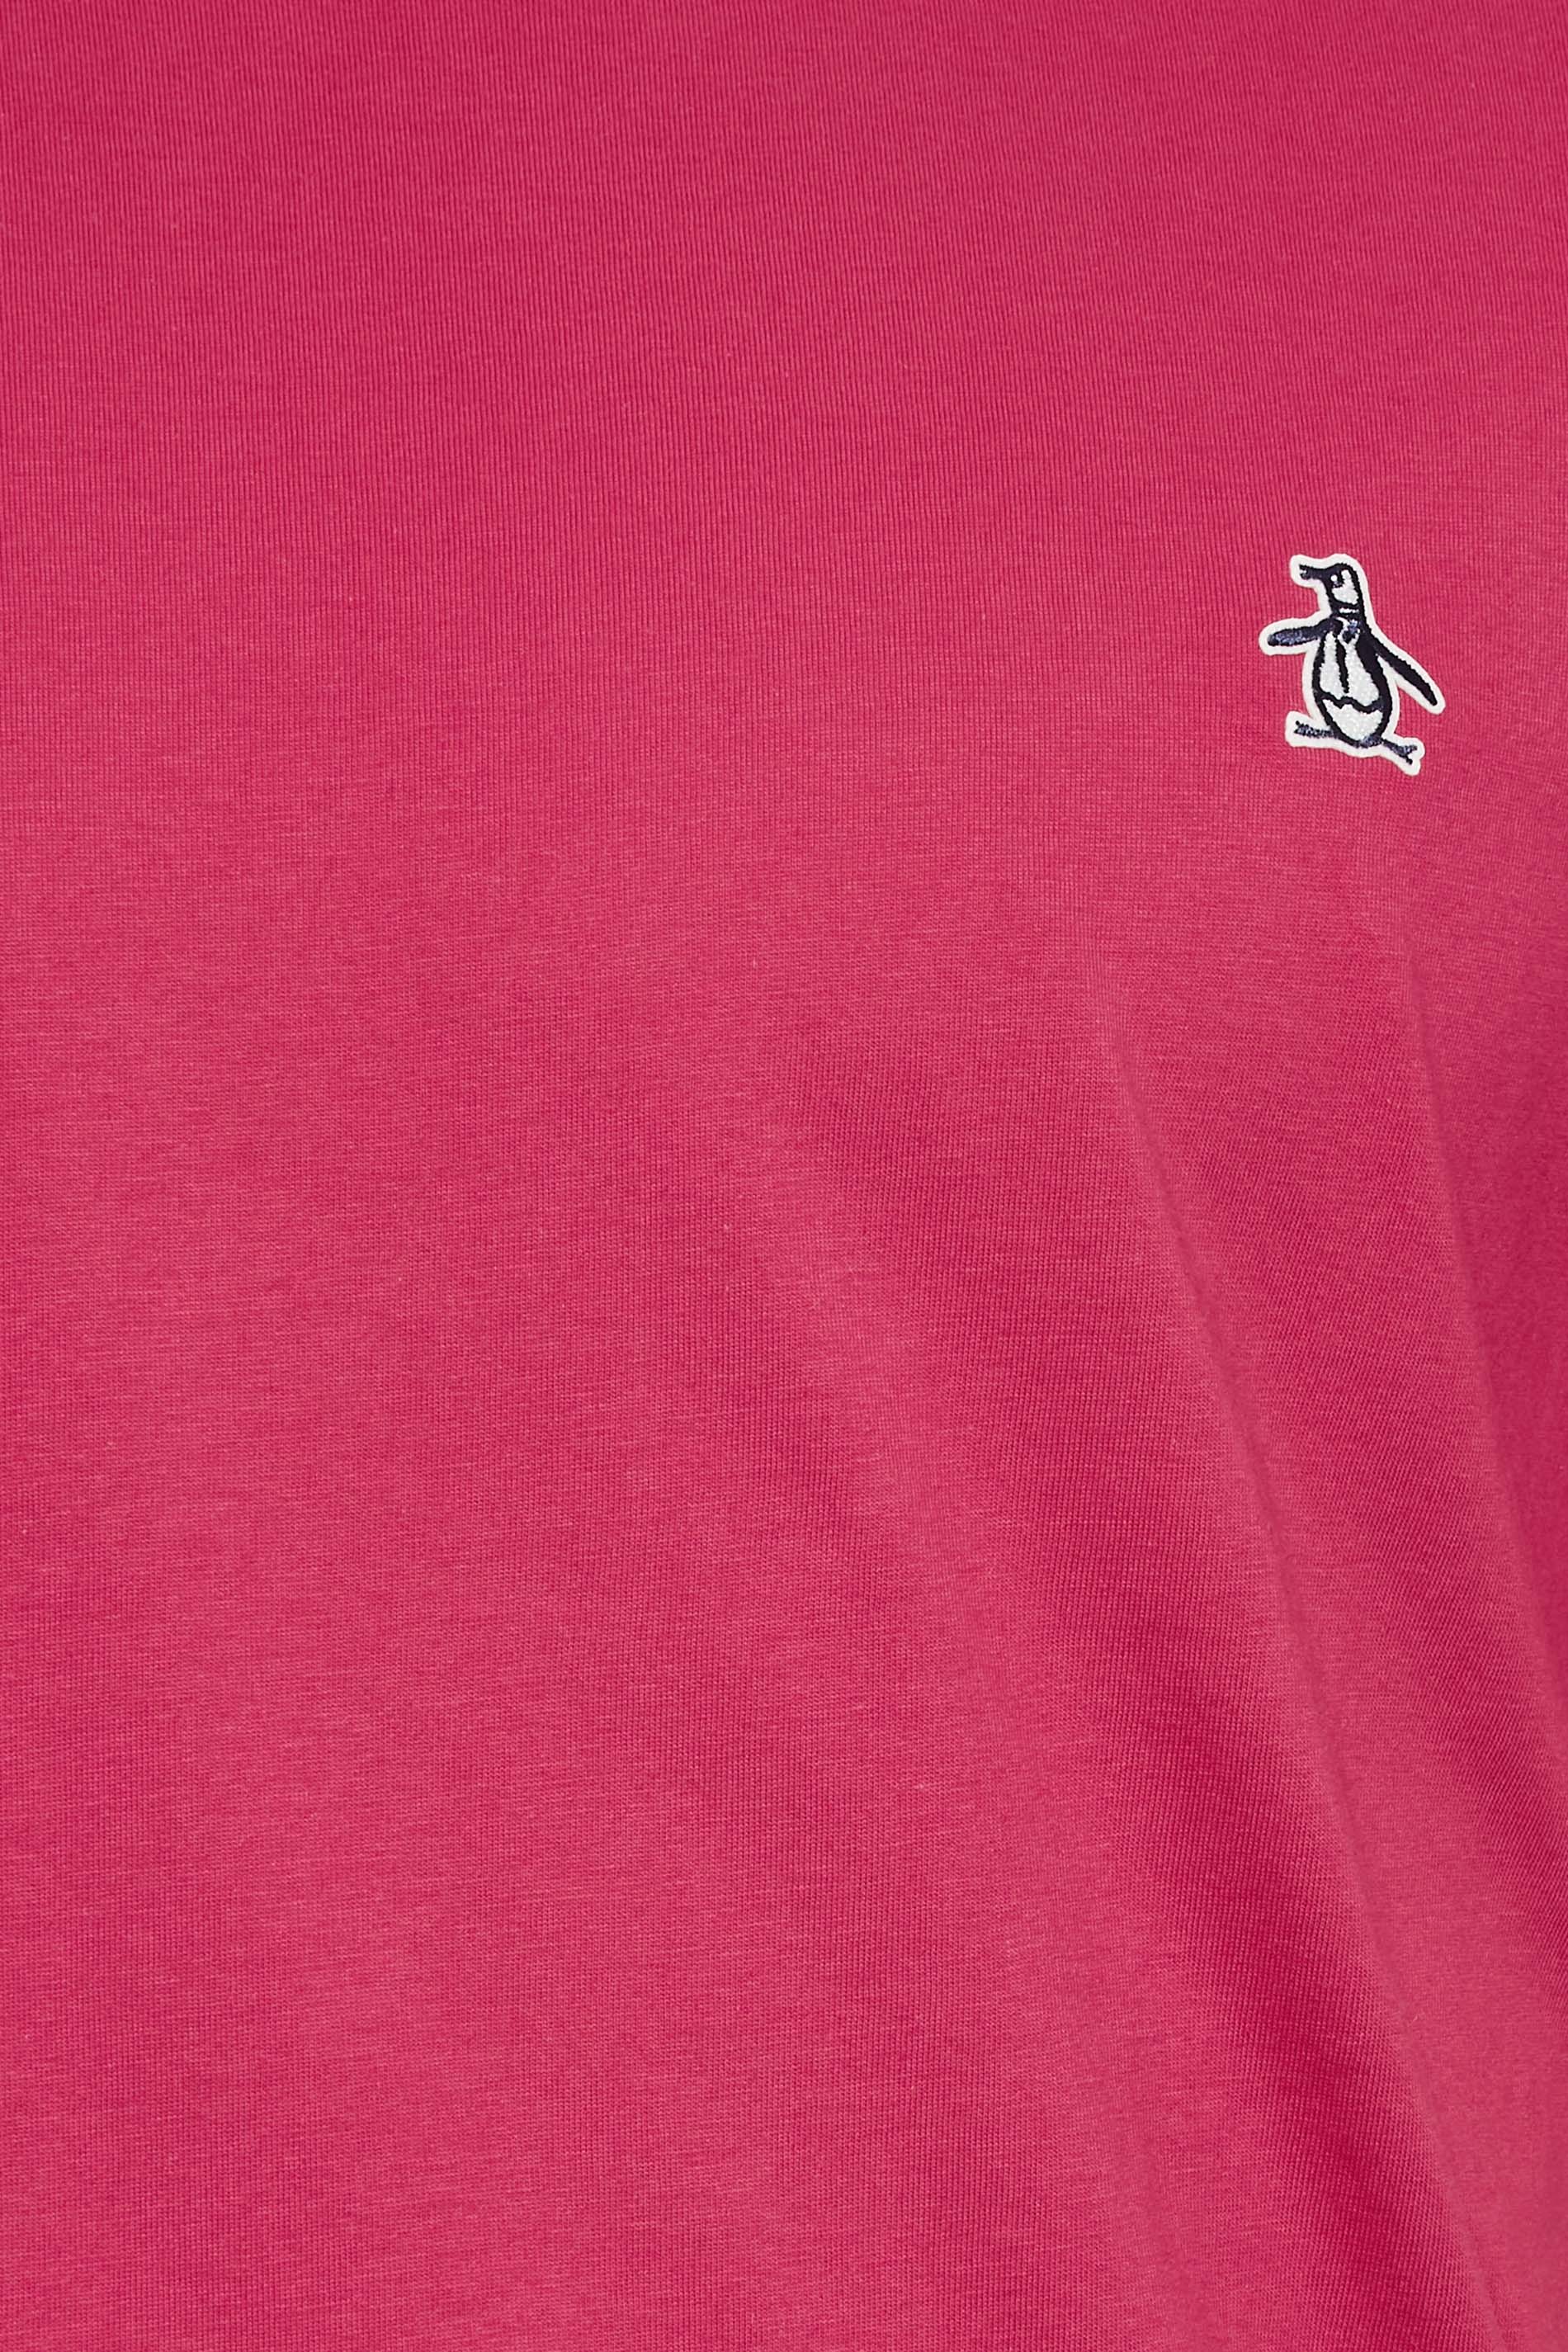 PENGUIN MUNSINGWEAR Big & Tall Red Logo T-Shirt | BadRhino  2